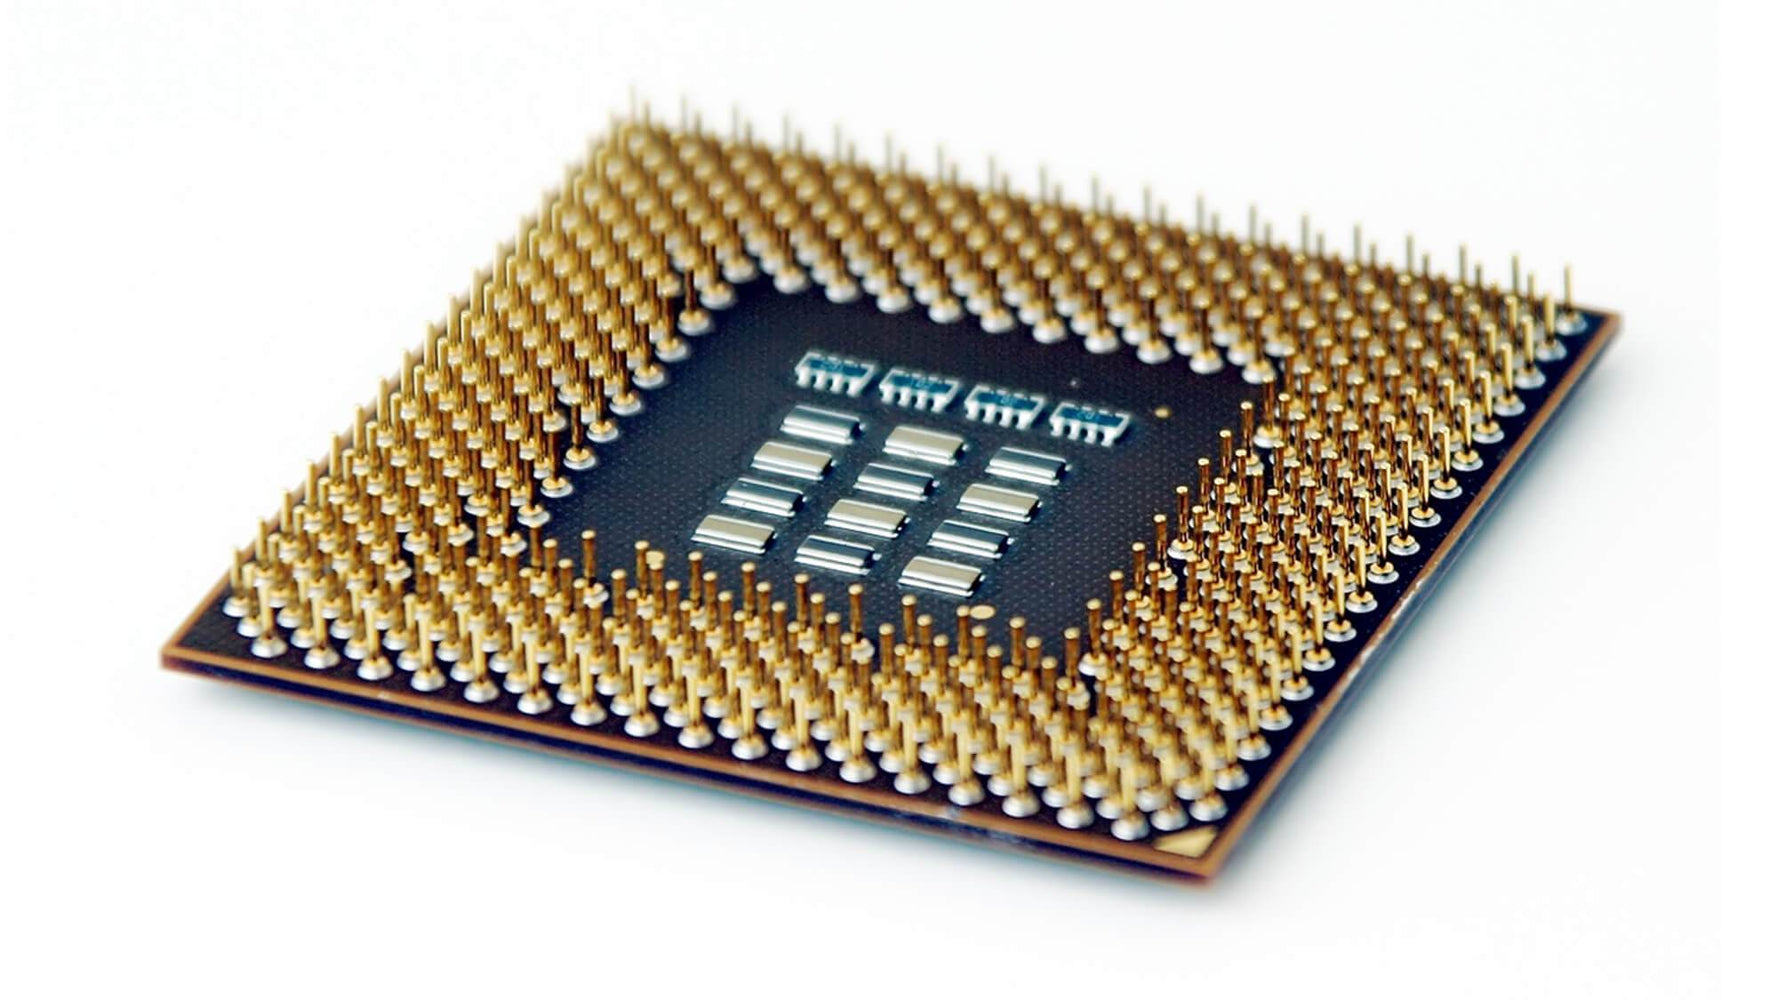 BX80623G870 - Intel Pentium G870 Dual Core 3.10GHz 5.00GT/s DMI 3MB L3 Cache Socket FCLGA1155 Processor